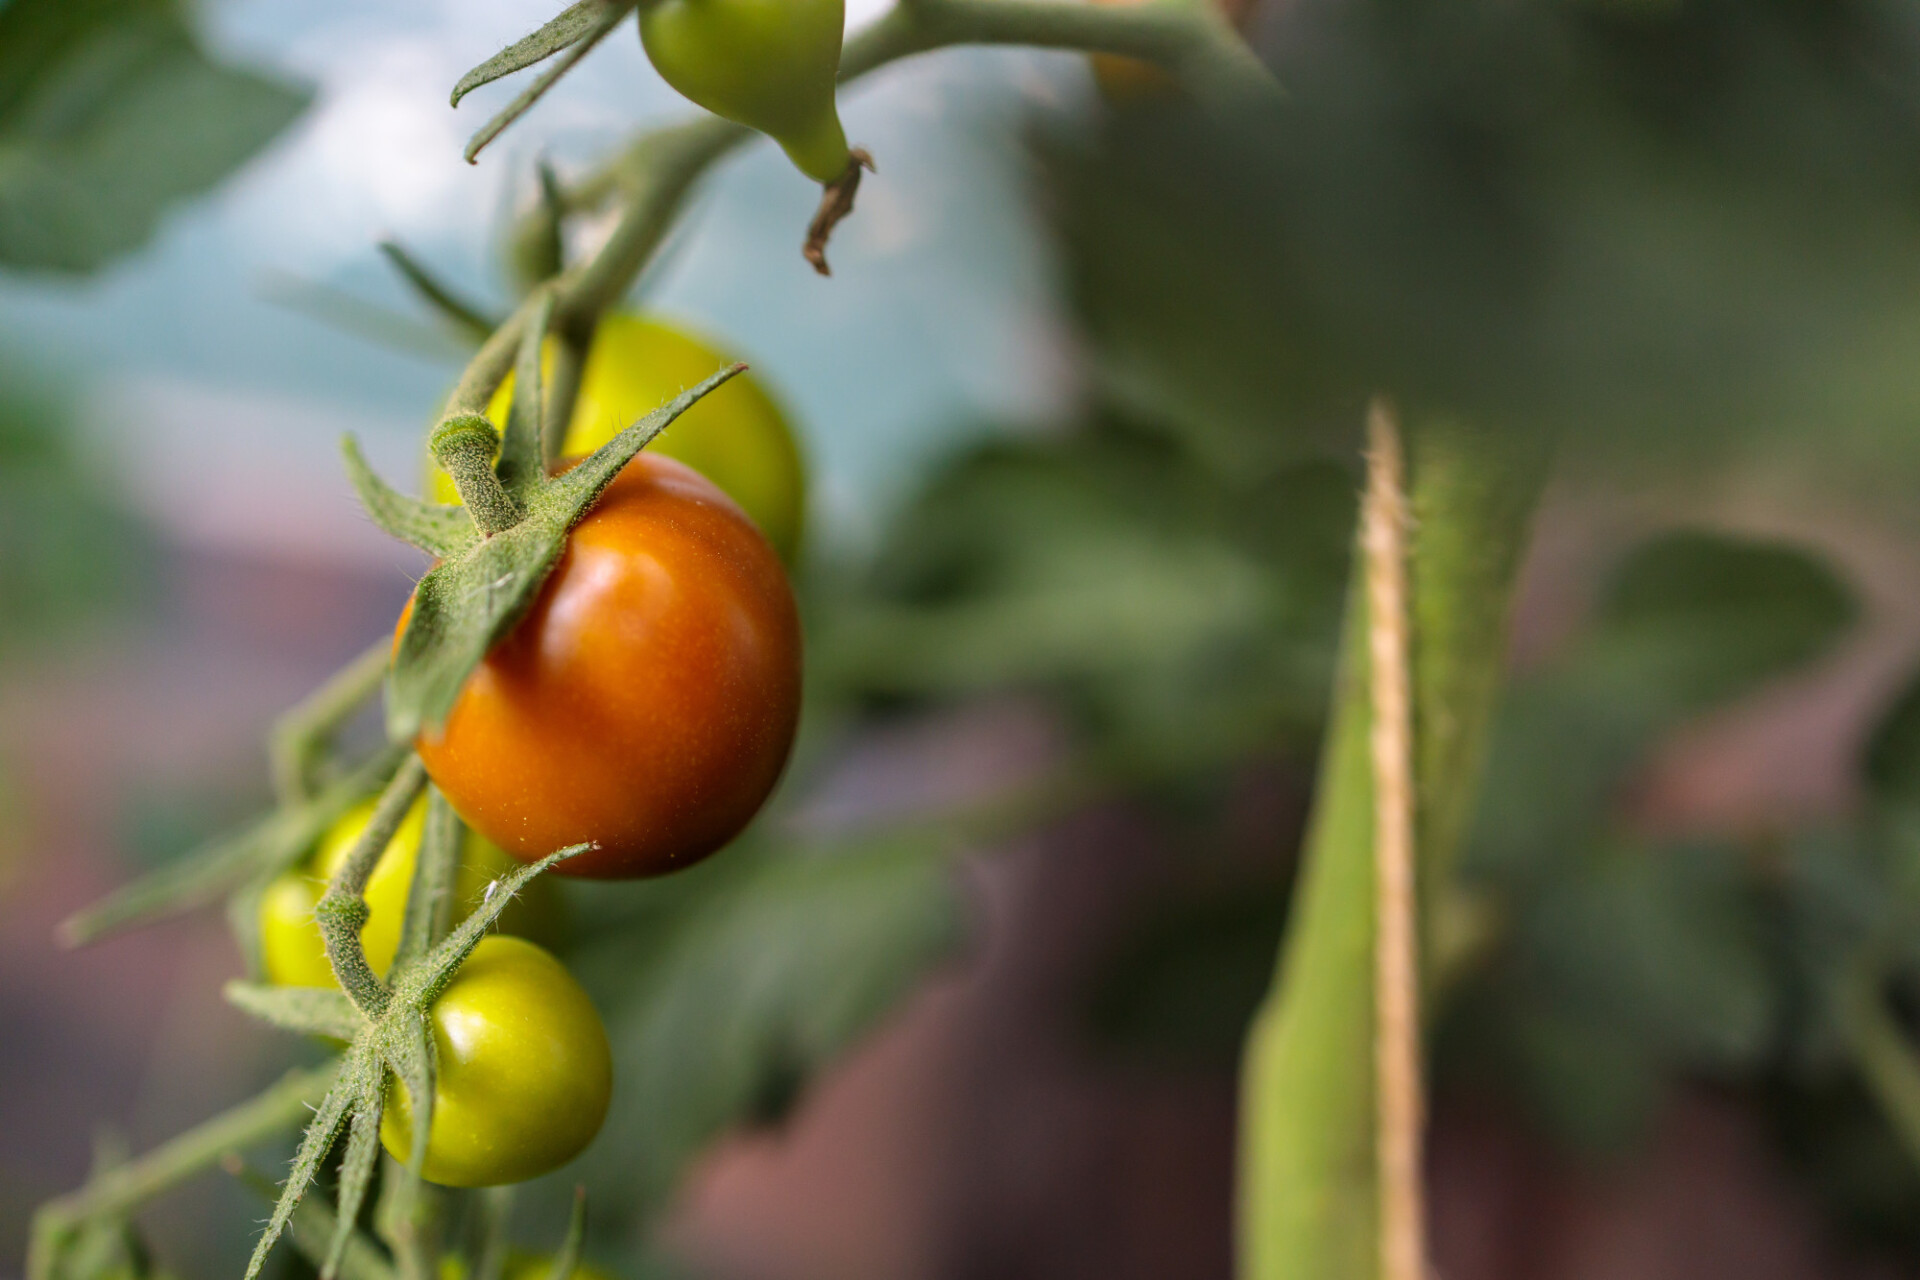 Red ripe tomato between green unripe